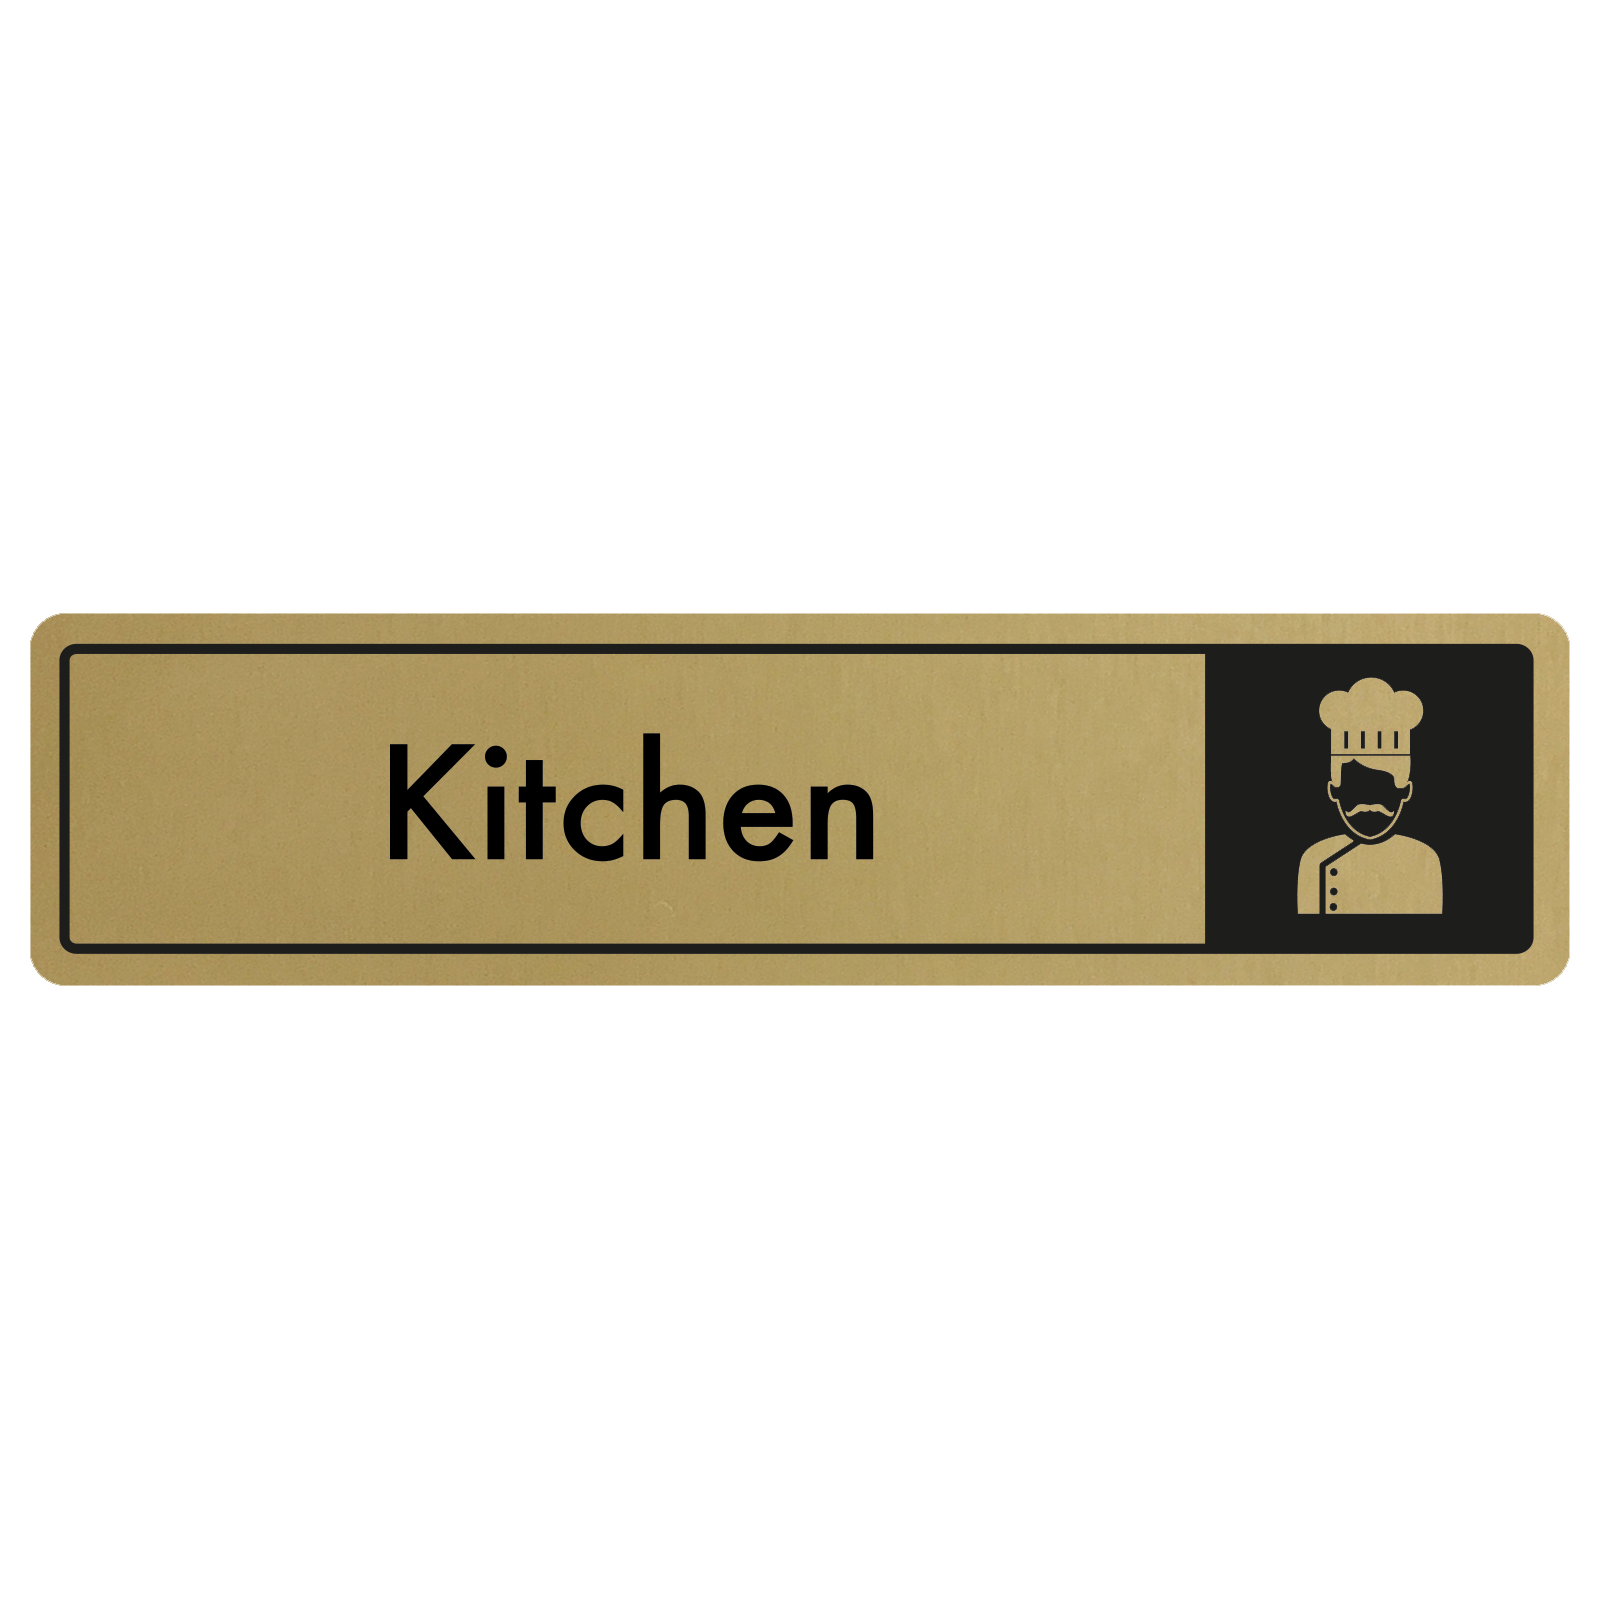 Kitchen Door Sign - Black on Gold